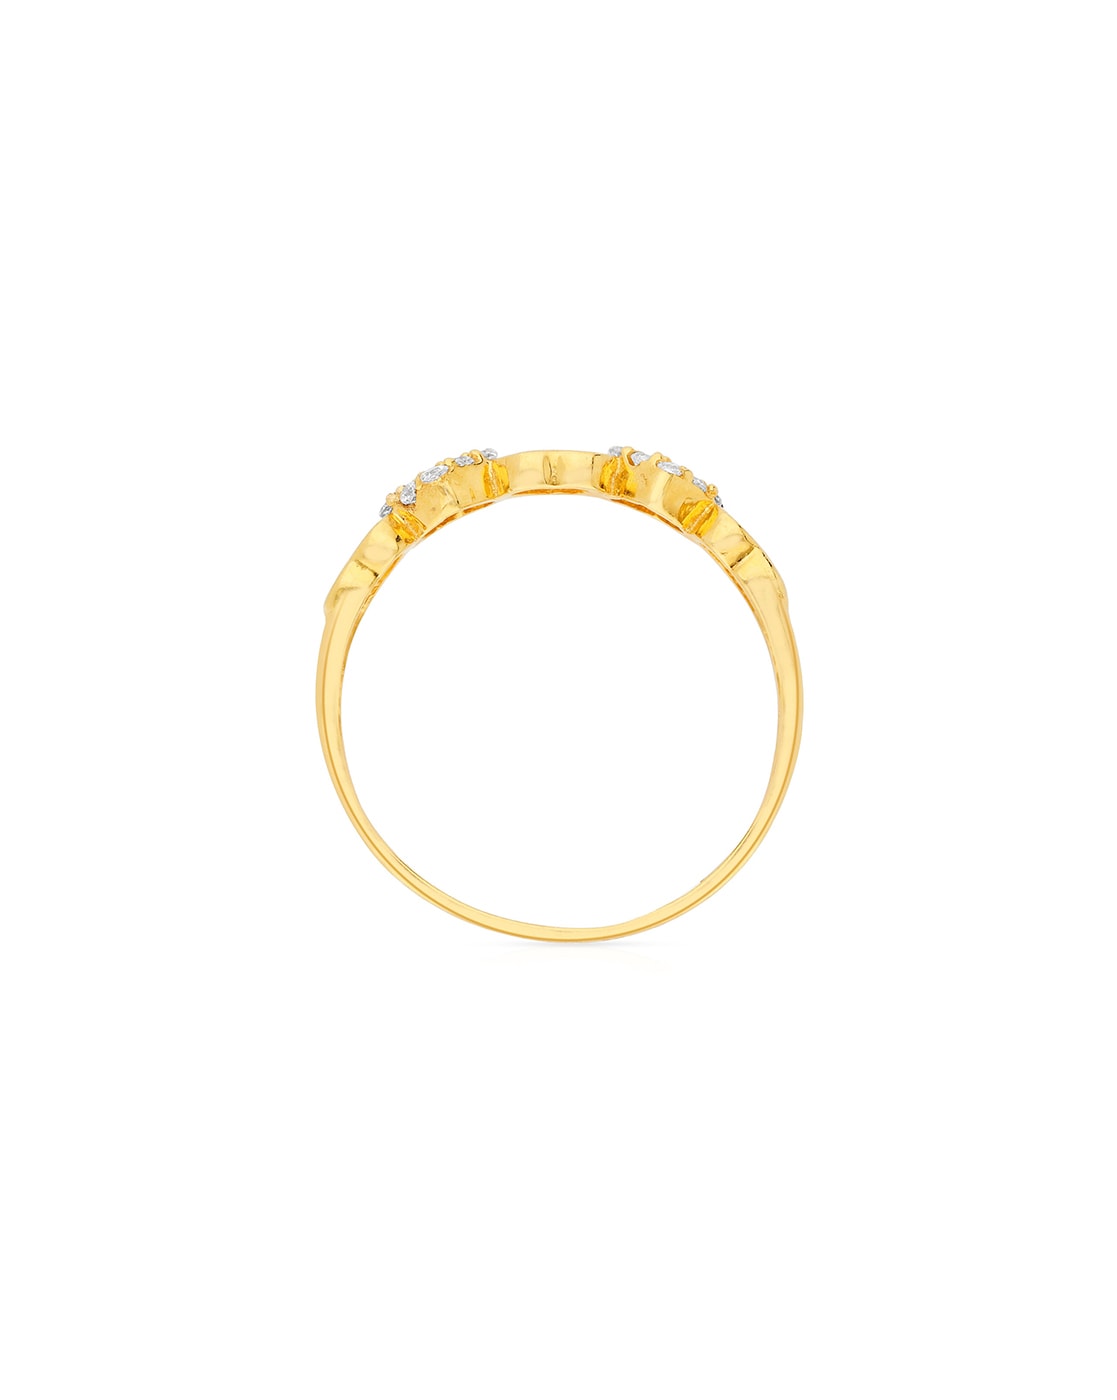 Latest 3gm gold ring design - YouTube